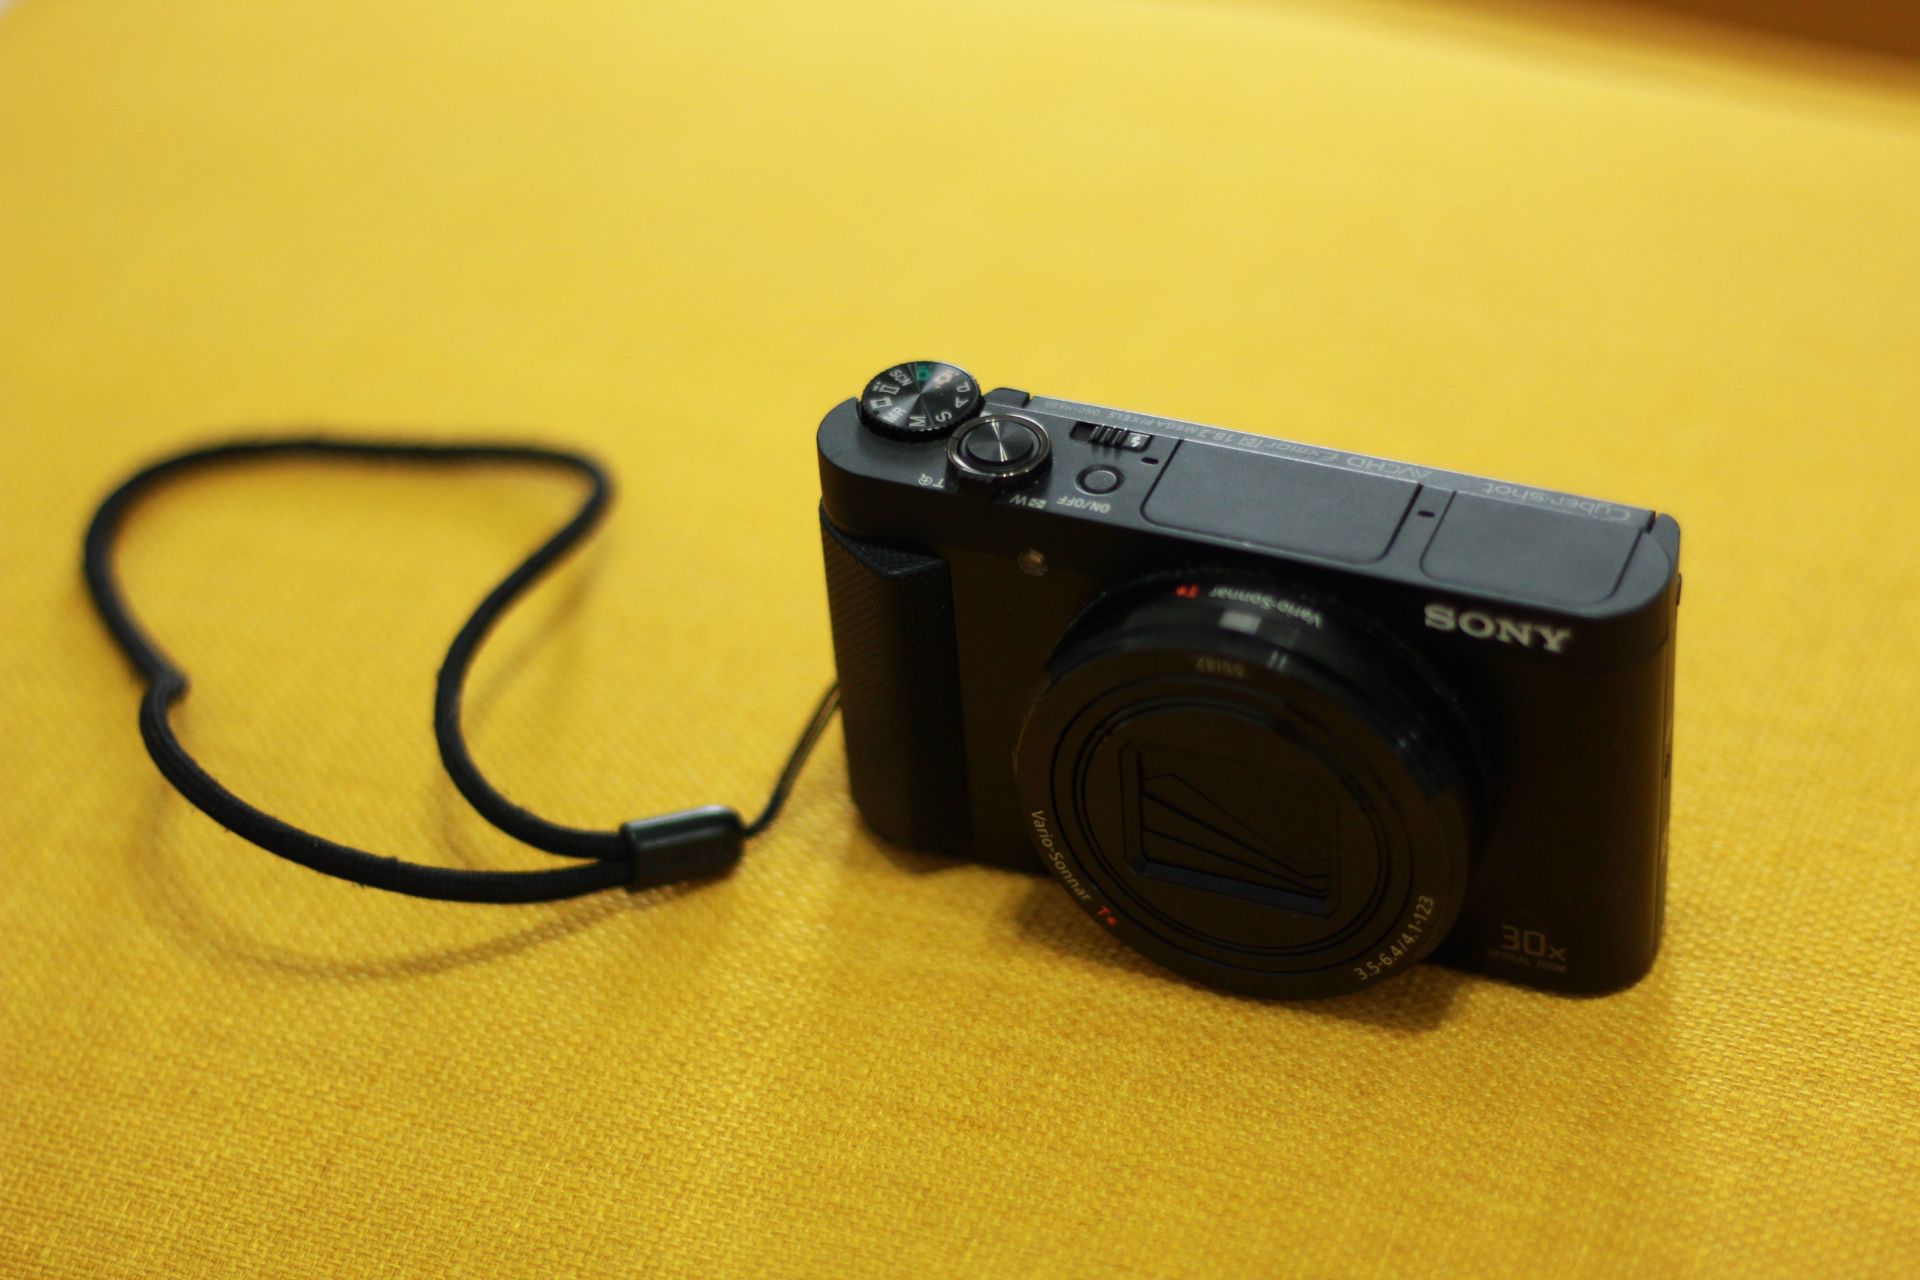 Sony Cyber-shot DSC-HX80 18.2 MP Digital Camera - Black